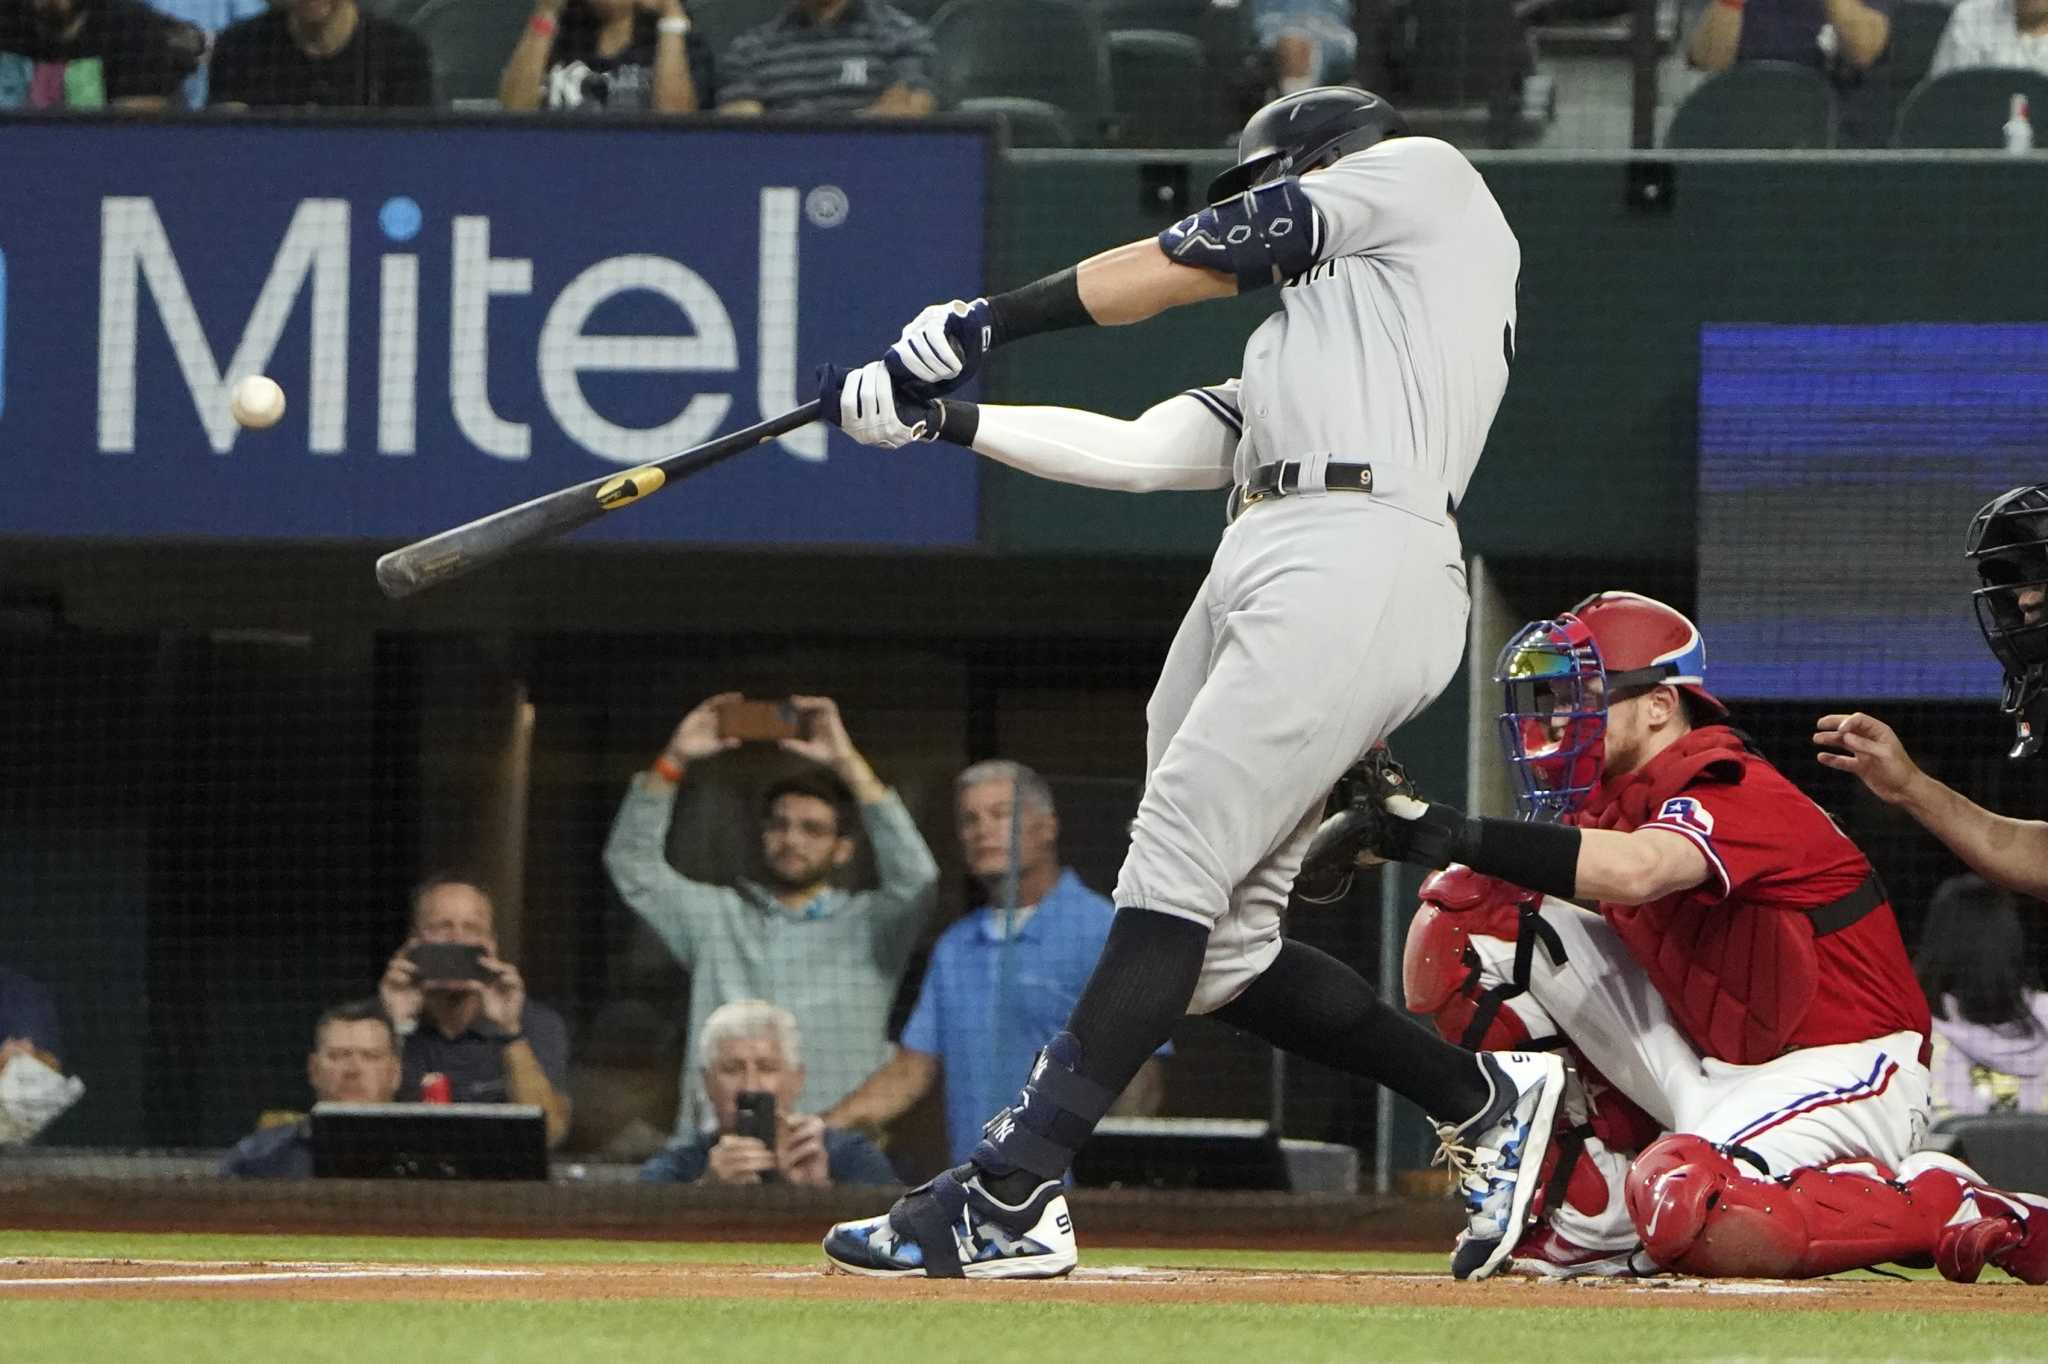 MLB: Aaron Judge breaks Roger Maris' AL home run record